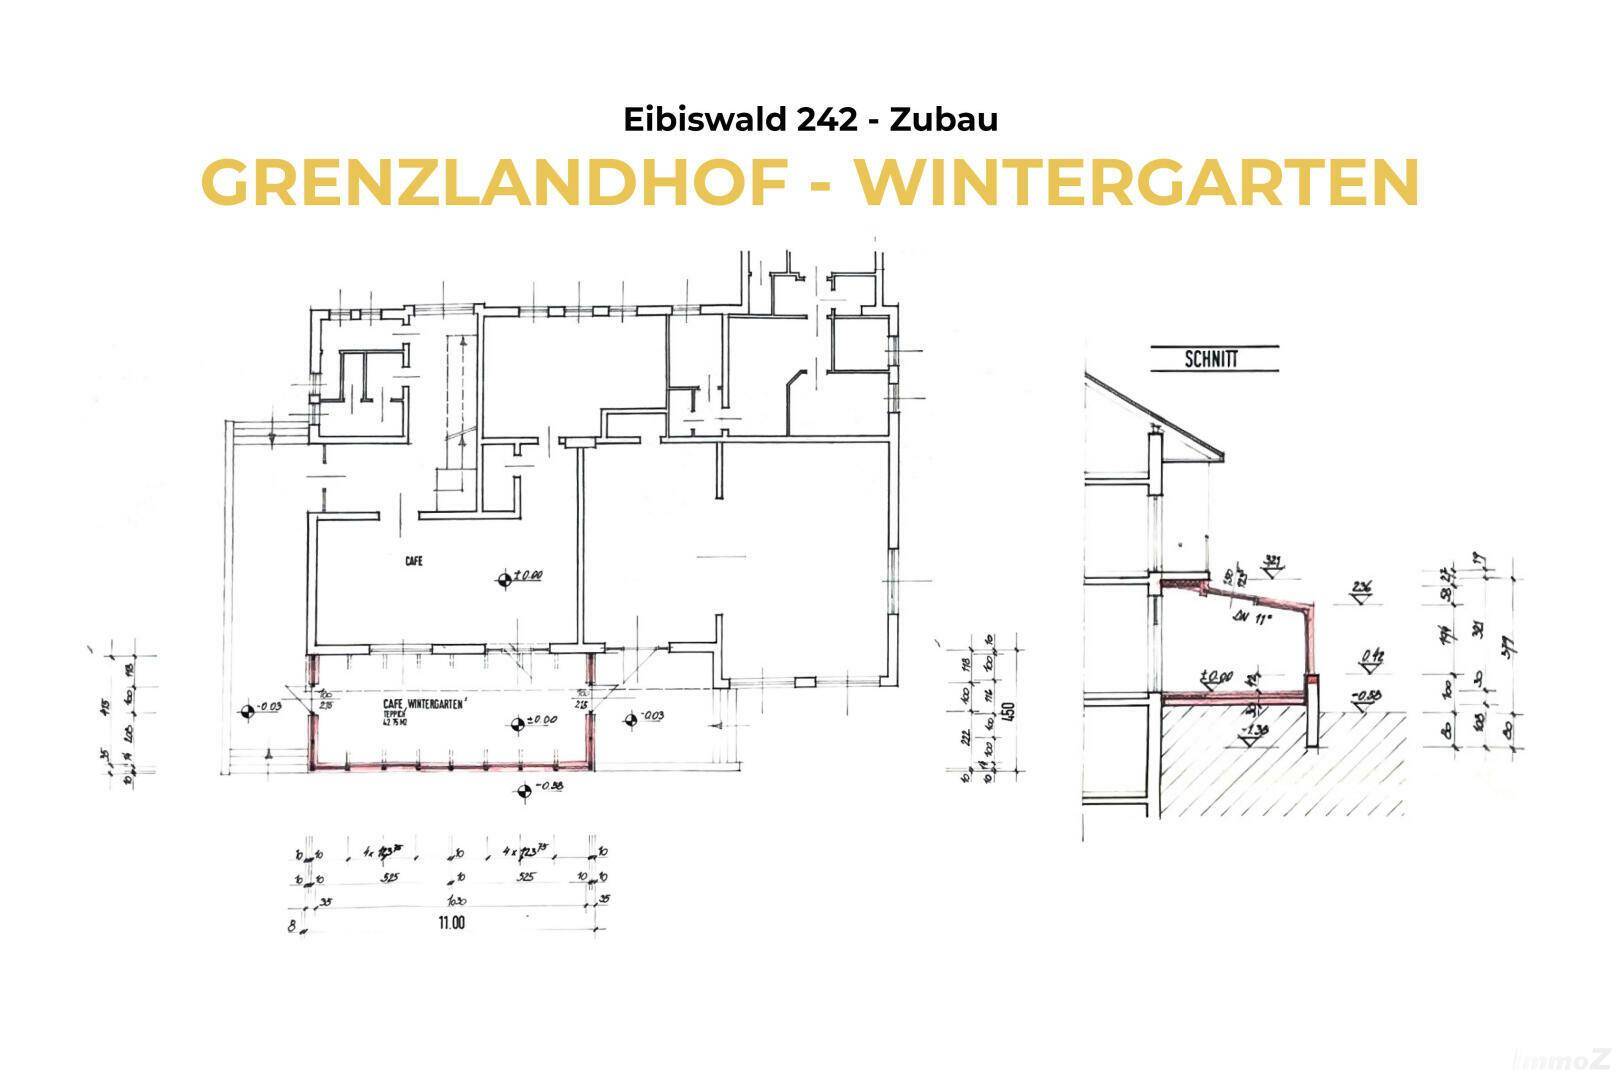 2.2 Grenzlandhof - Wintergarten ZB